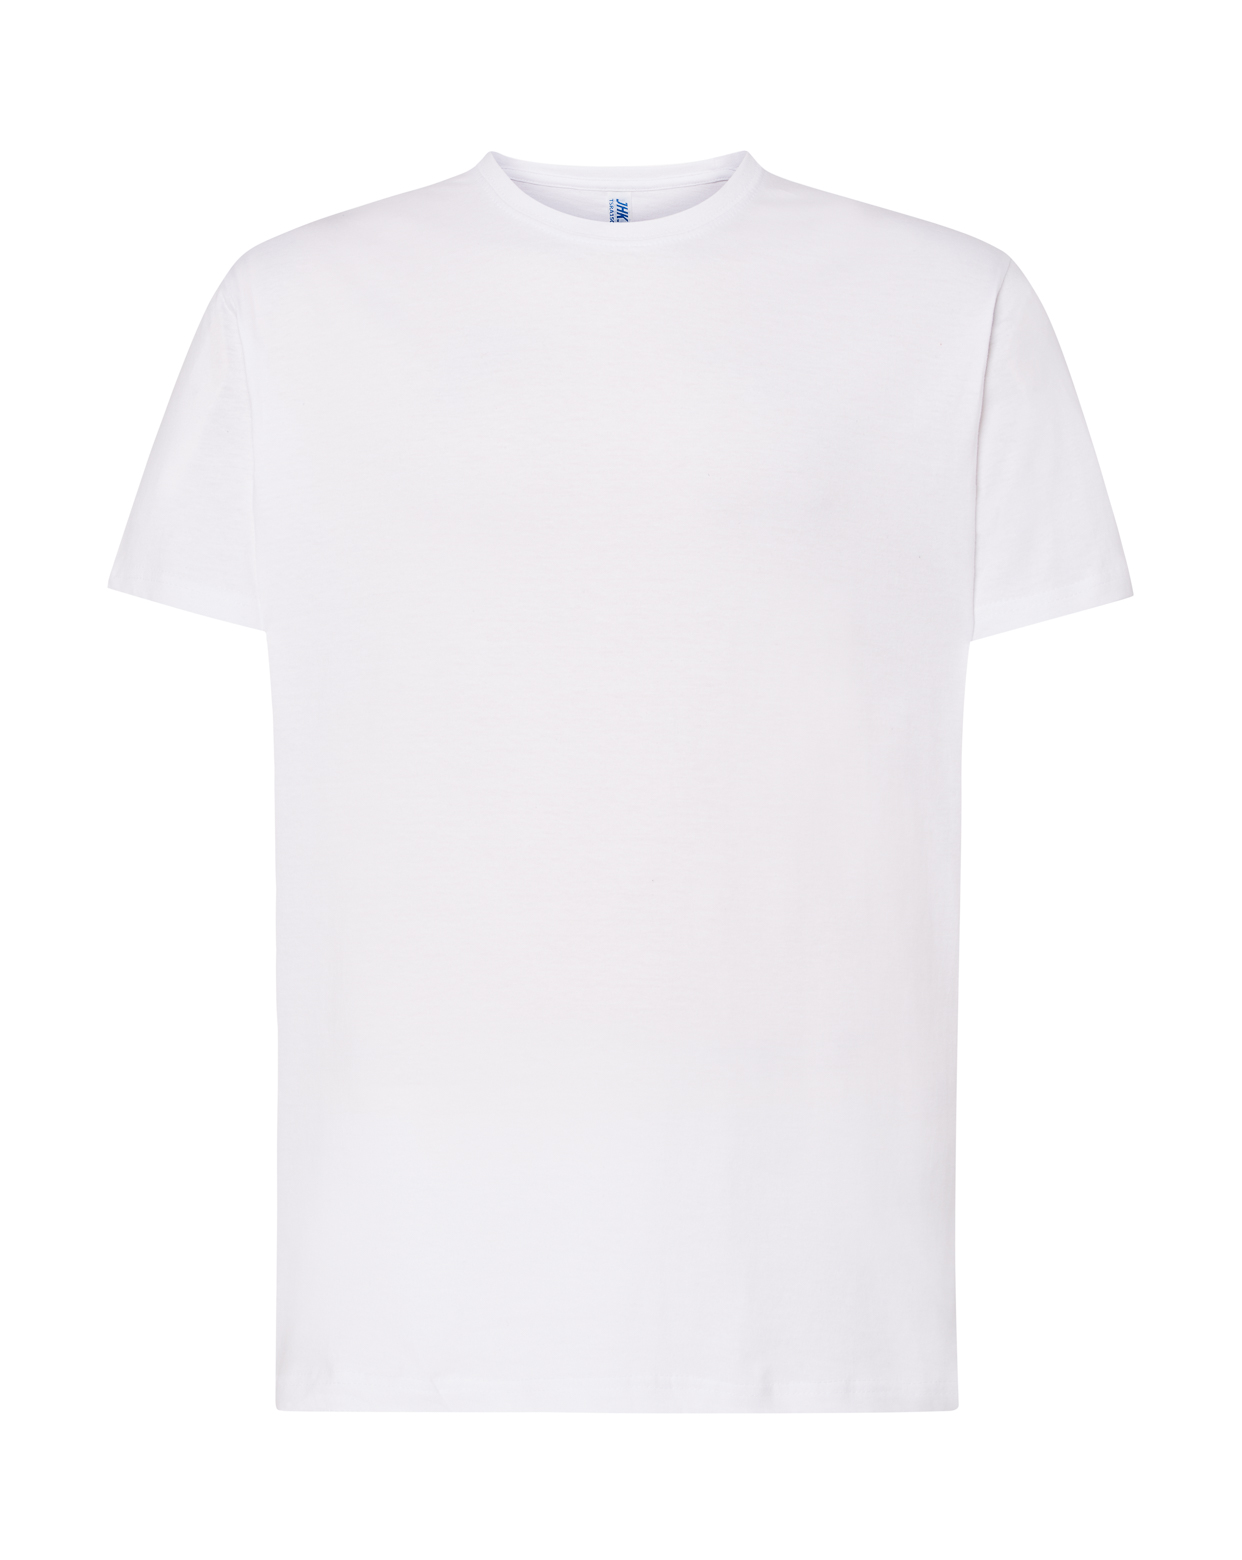 Camiseta blanca hombre - Sobre Todo